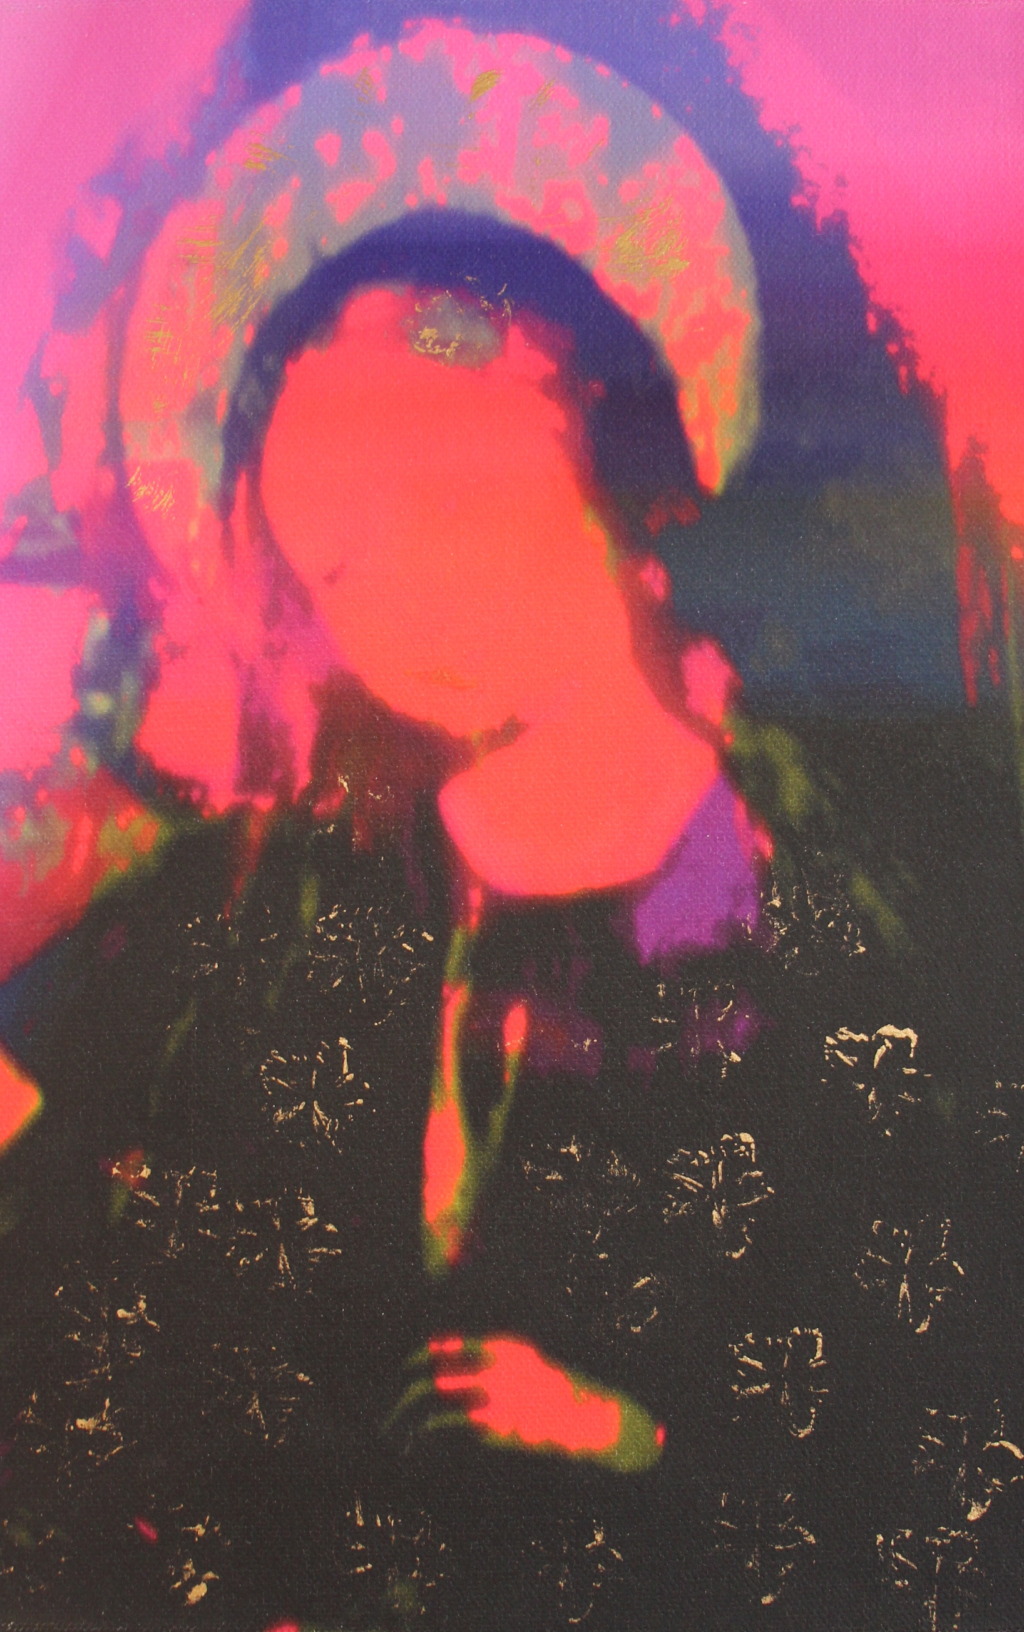 Annelies Štrba, Madonna, 2014
Pigment print on canvas
30 x 20 cm